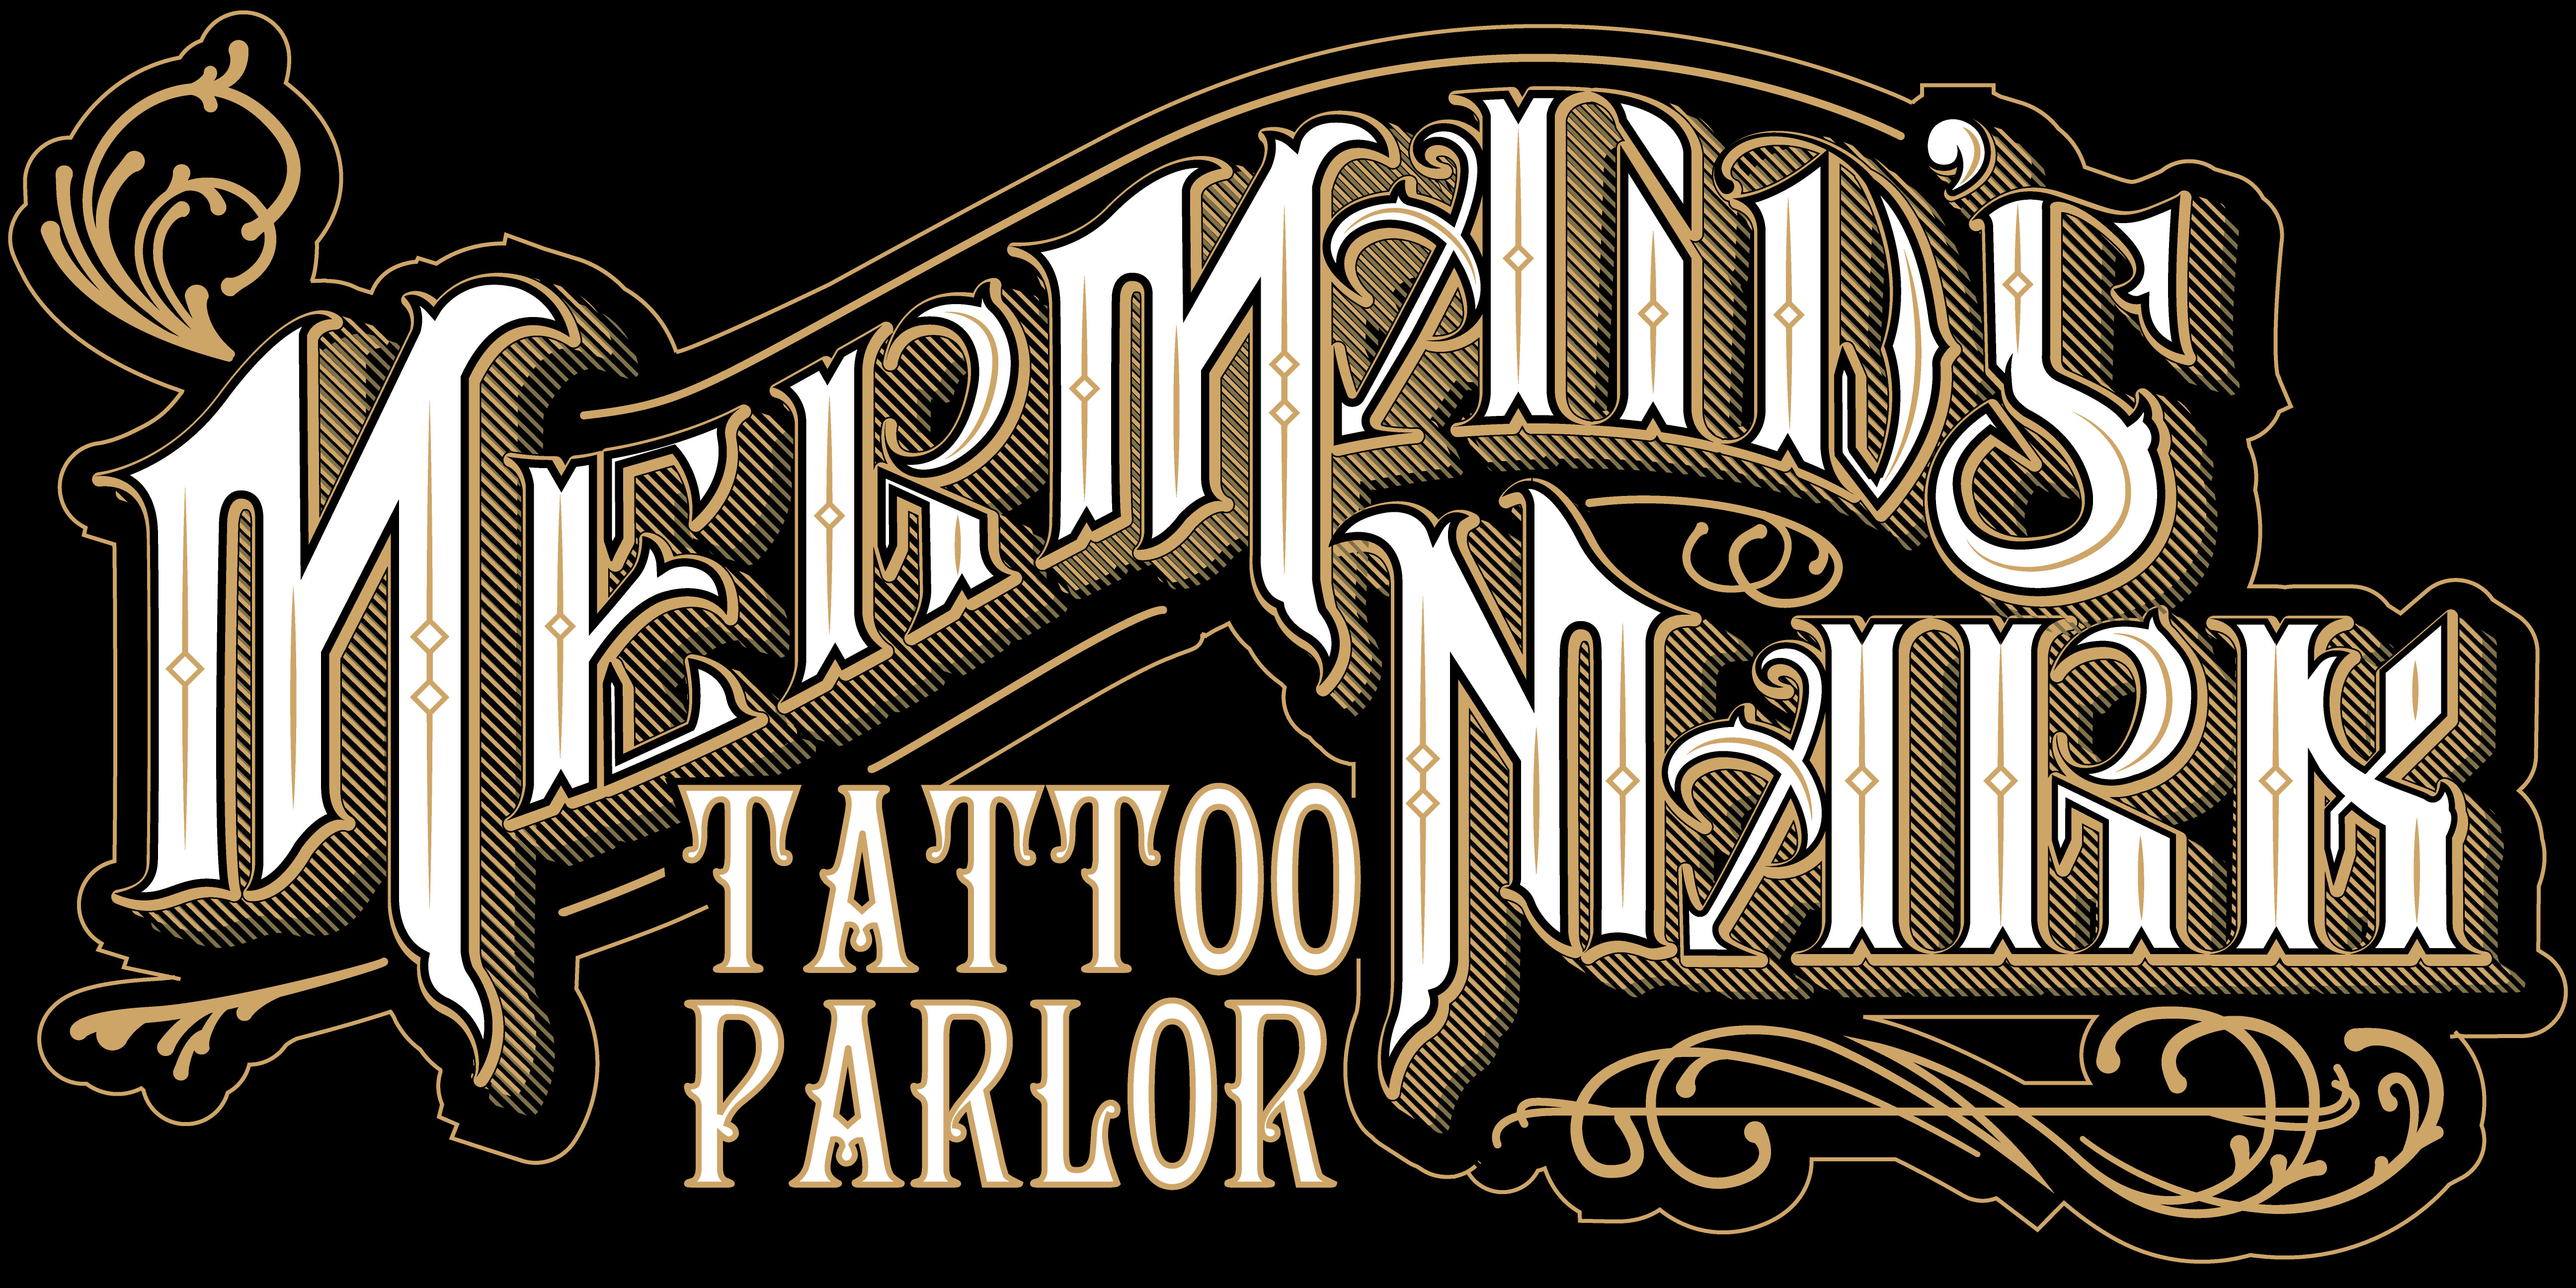 Mermaids mark tattoo parlor